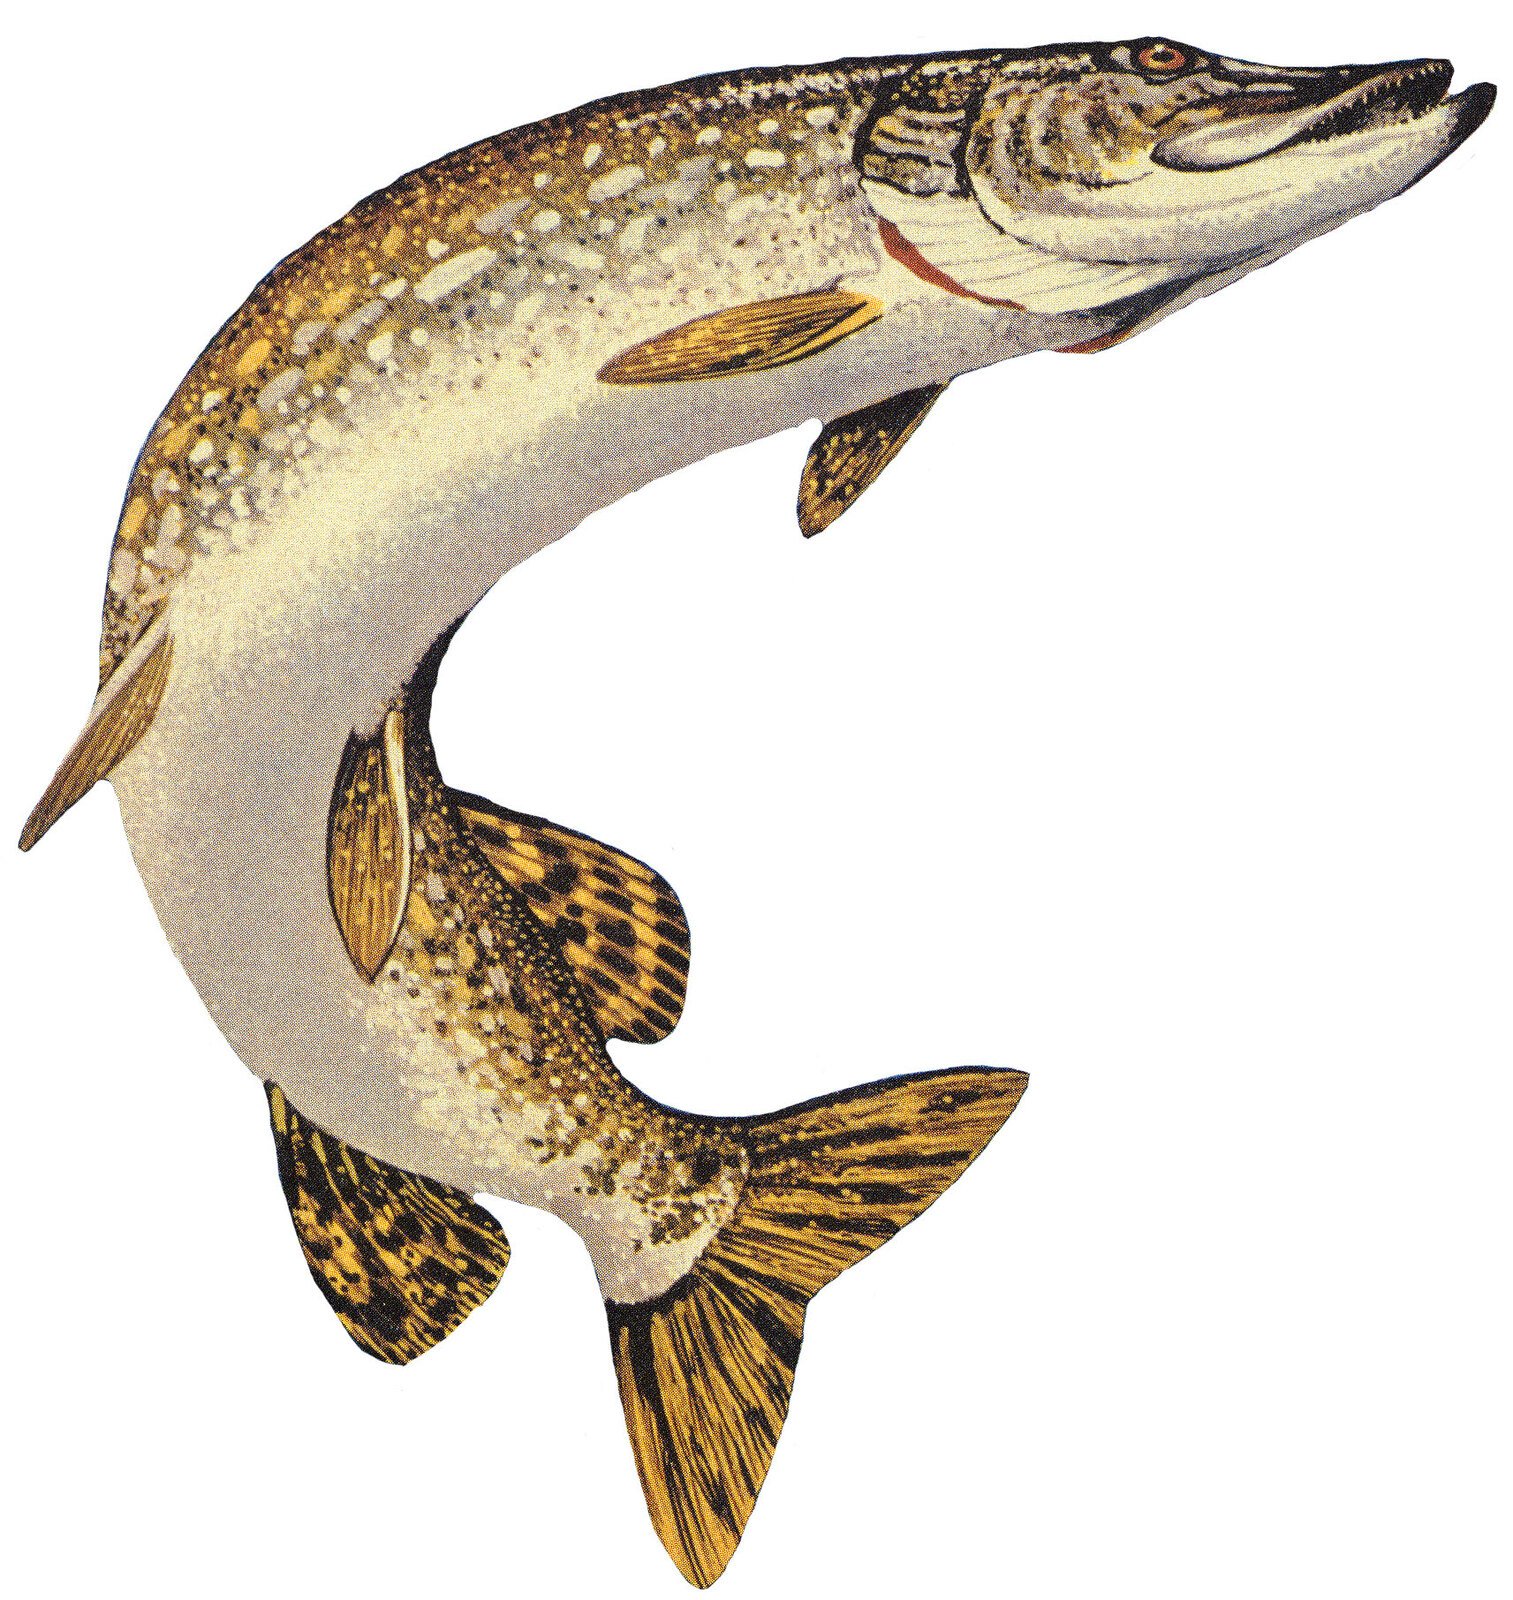 Фон щука. Esox kronneri. Речные рыбы щука. Esox Lucius — обыкновенная щука систематика. Northern Pike рыба.